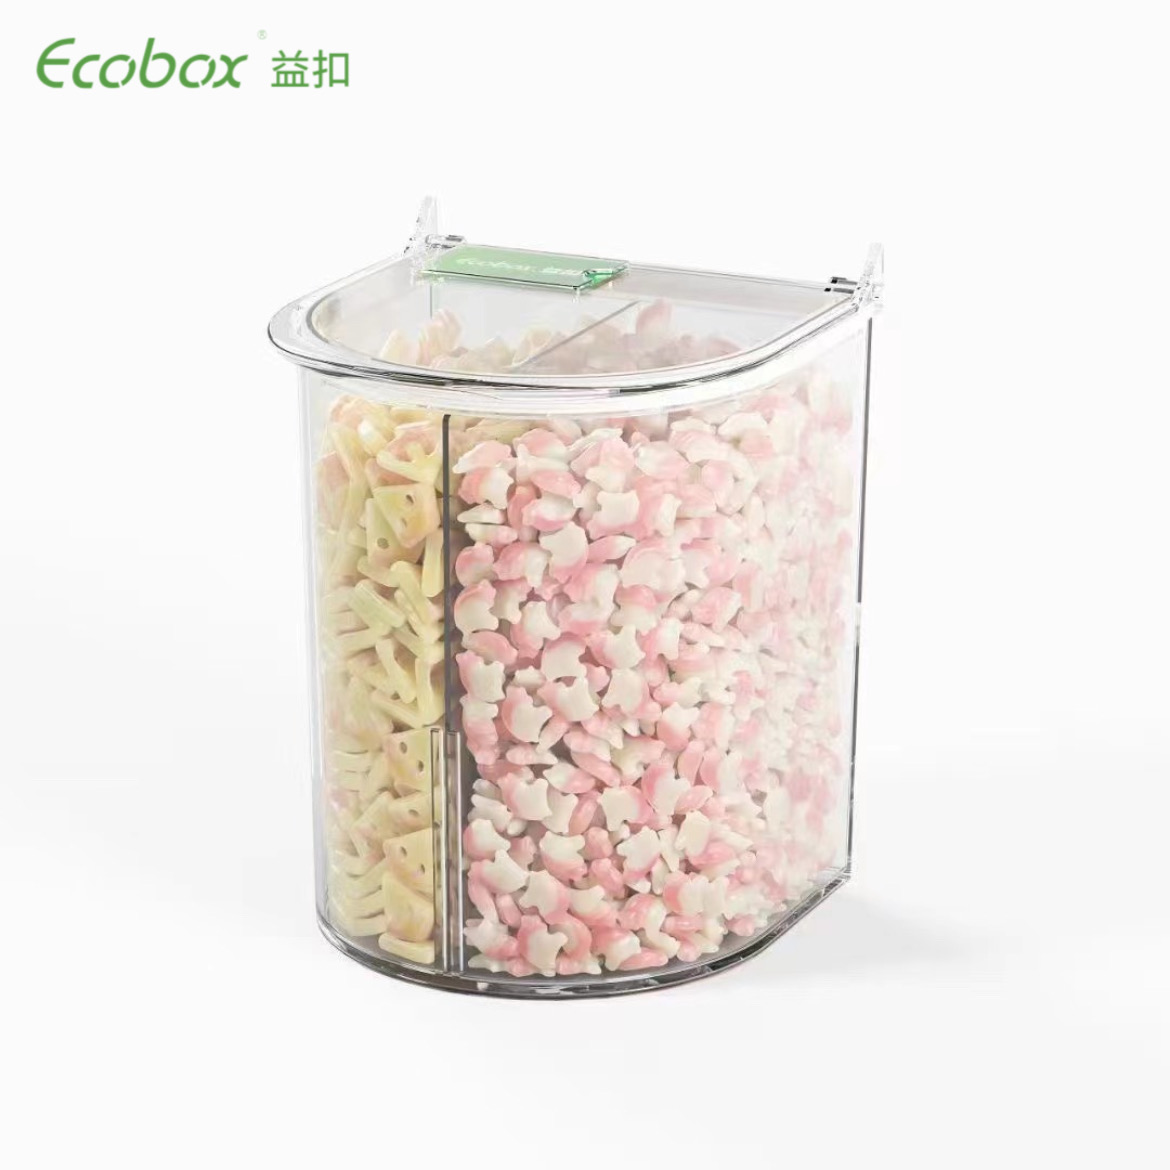 Ecobox MY-0101C Contenedor a granel apilable para supermercado para alimentos y dulces a granel